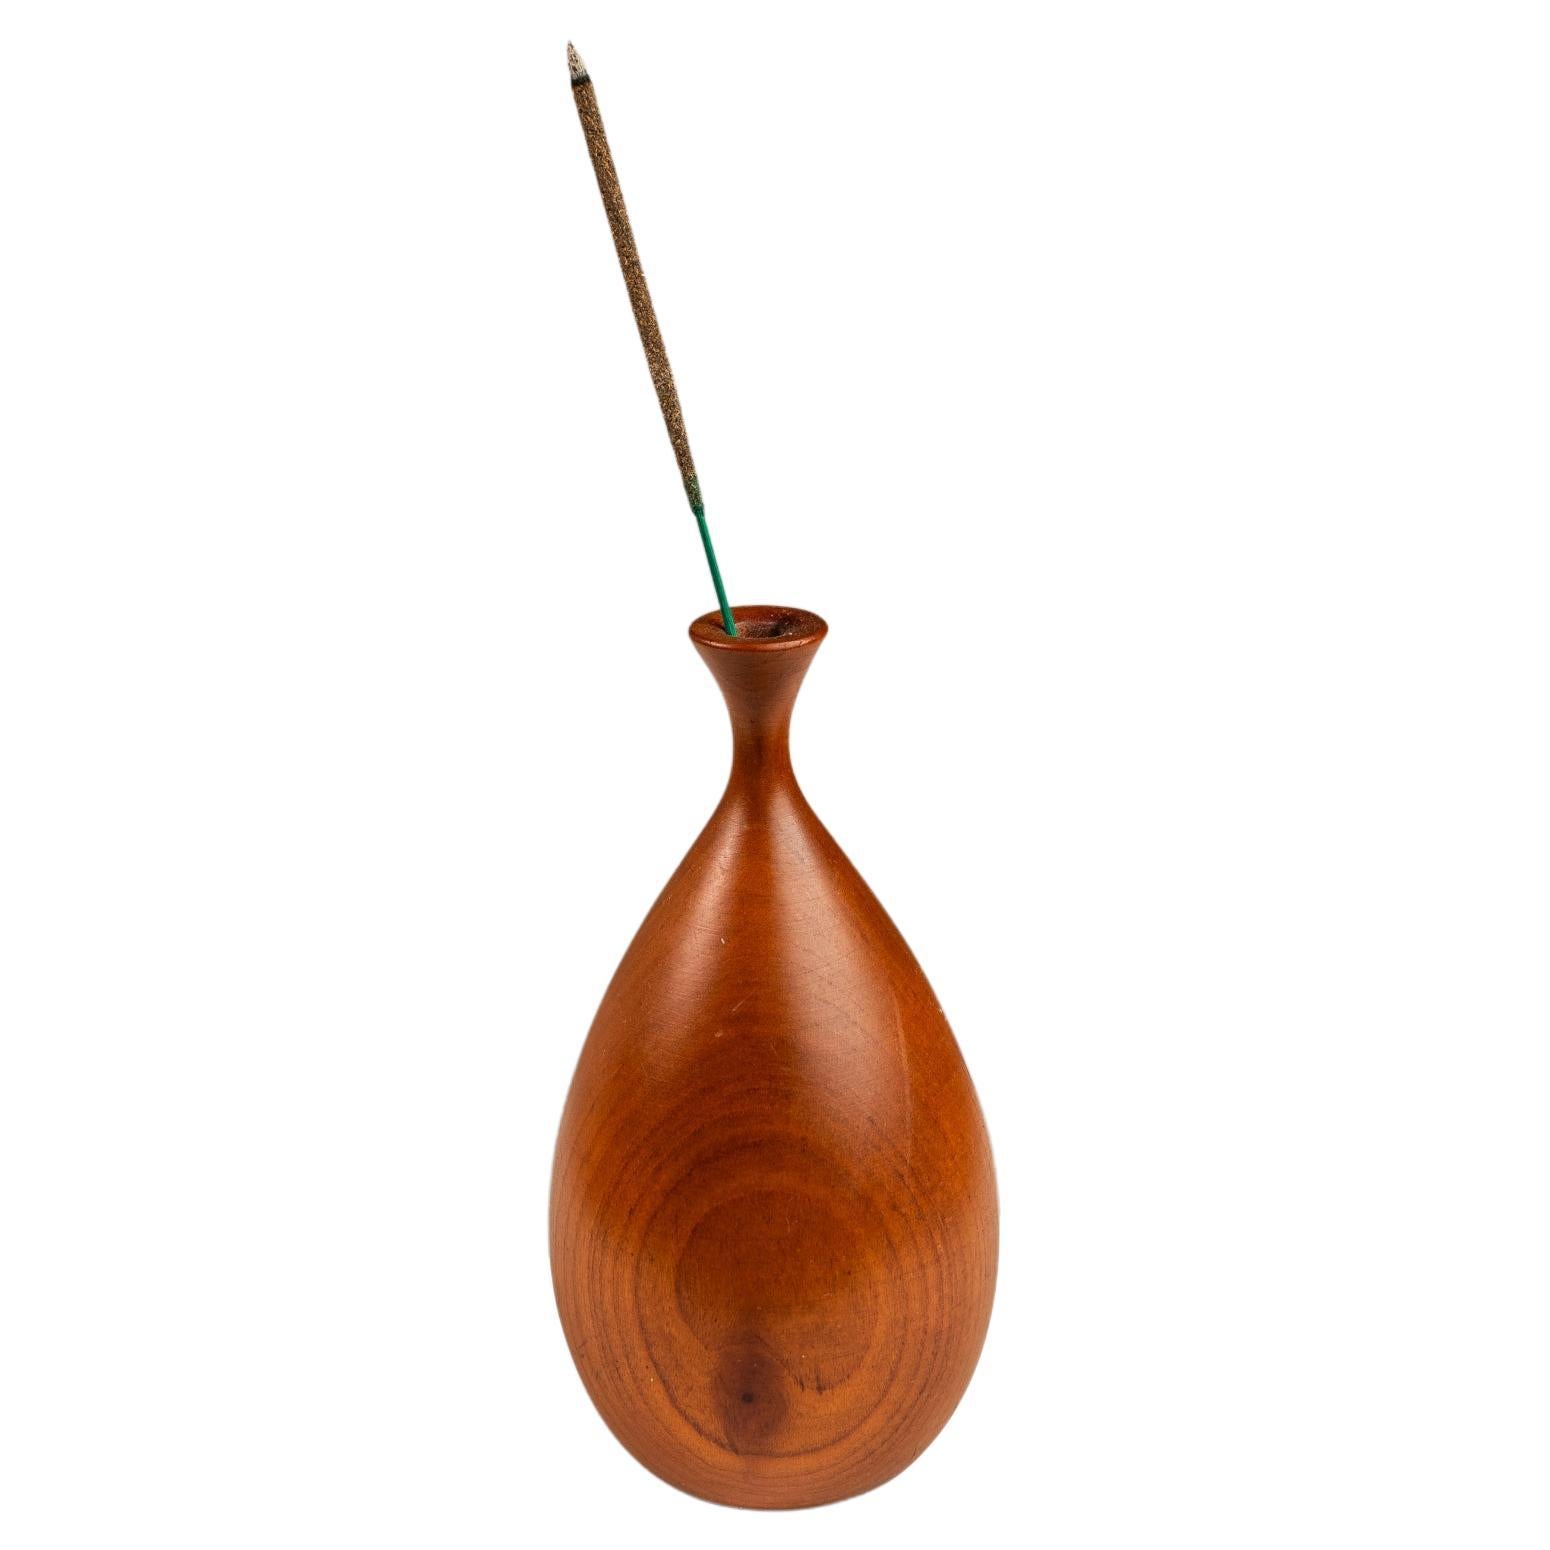 Signed Petite Wood-Turned Vase in solid Walnut by George Biersdorf, USA, c. 1979